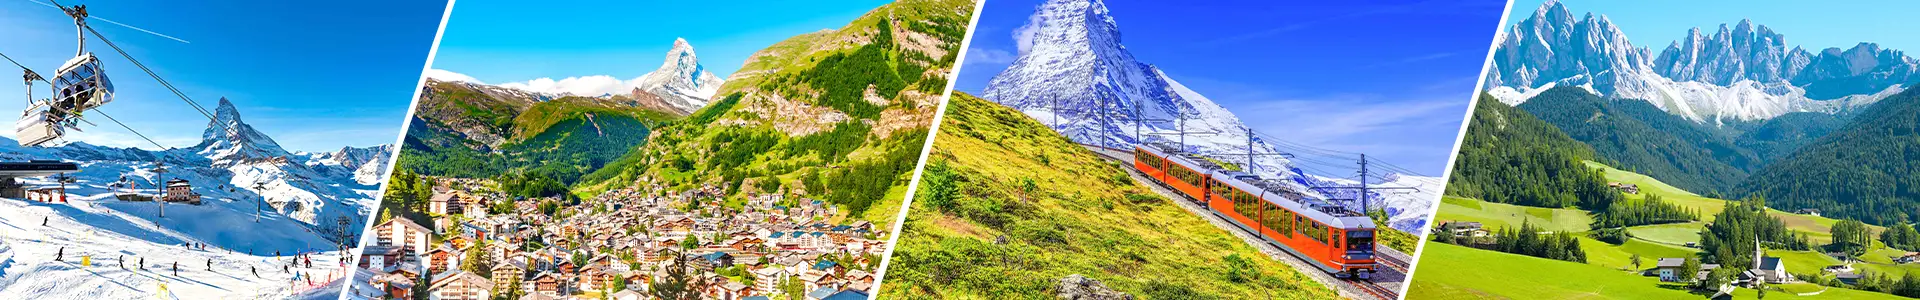 Zermatt Tour Packages